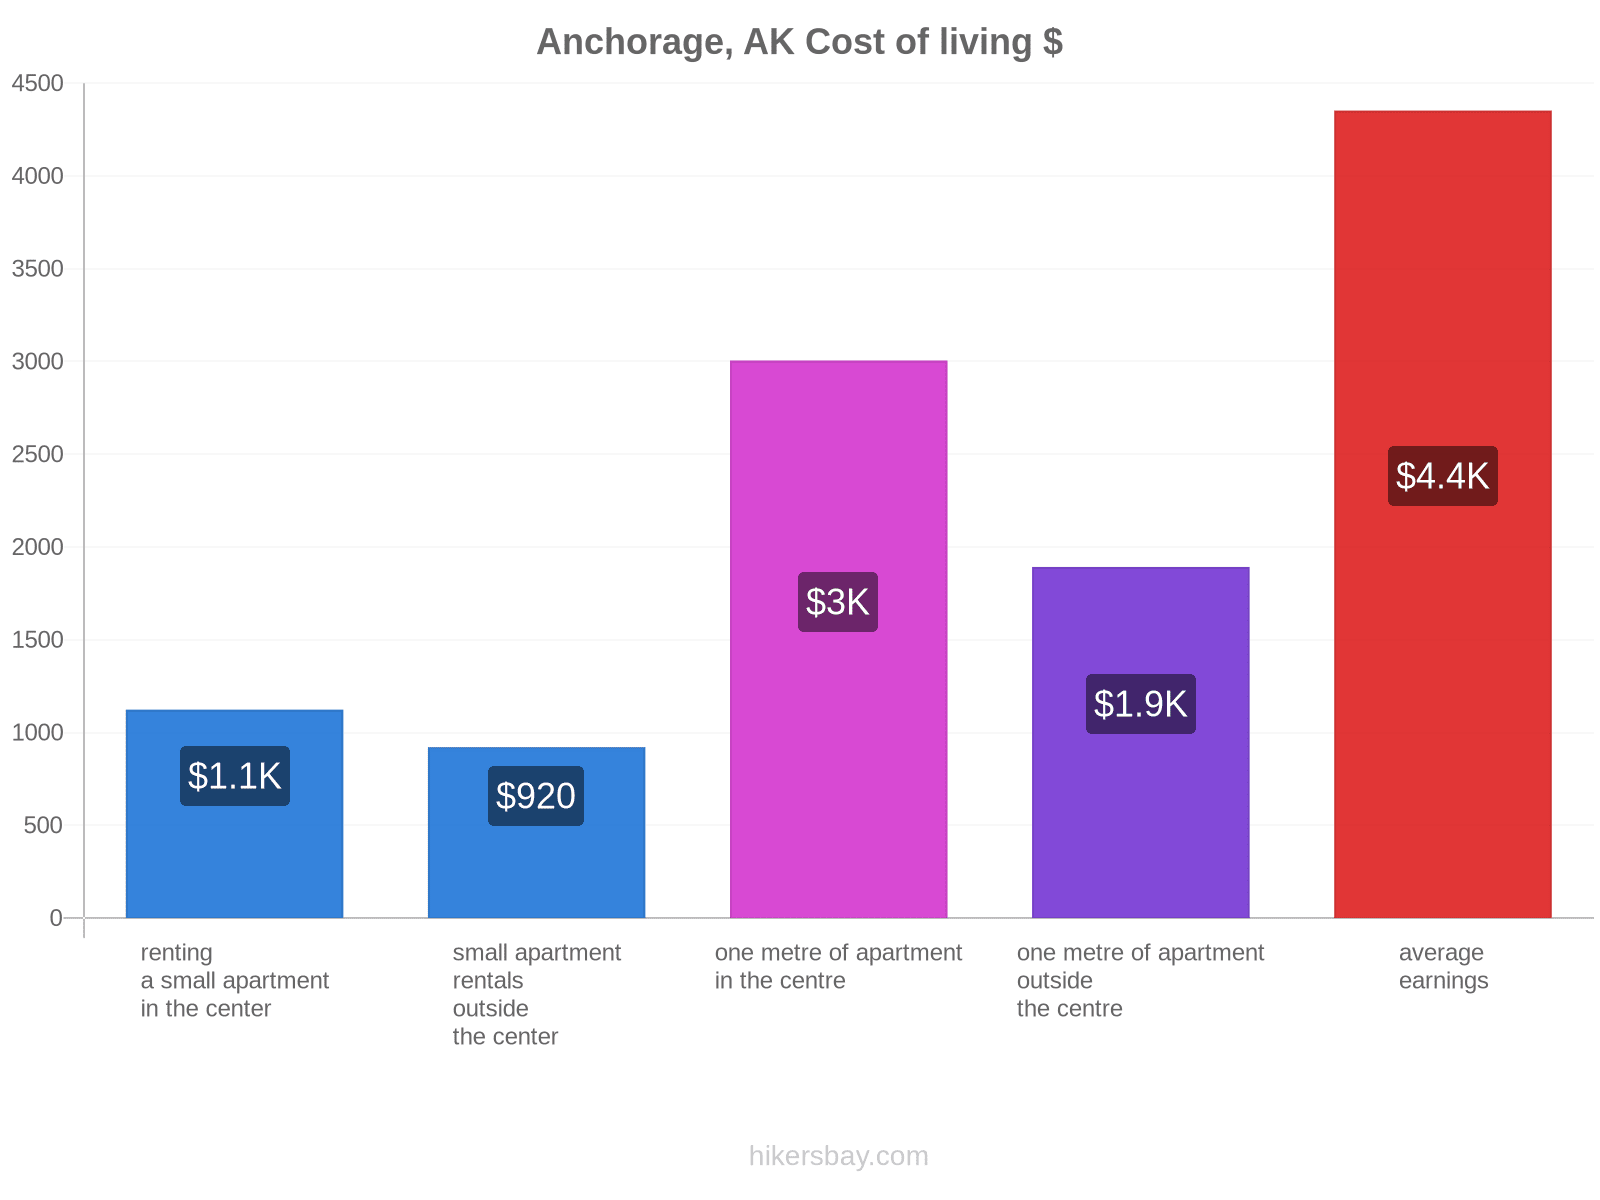 Anchorage, AK cost of living hikersbay.com